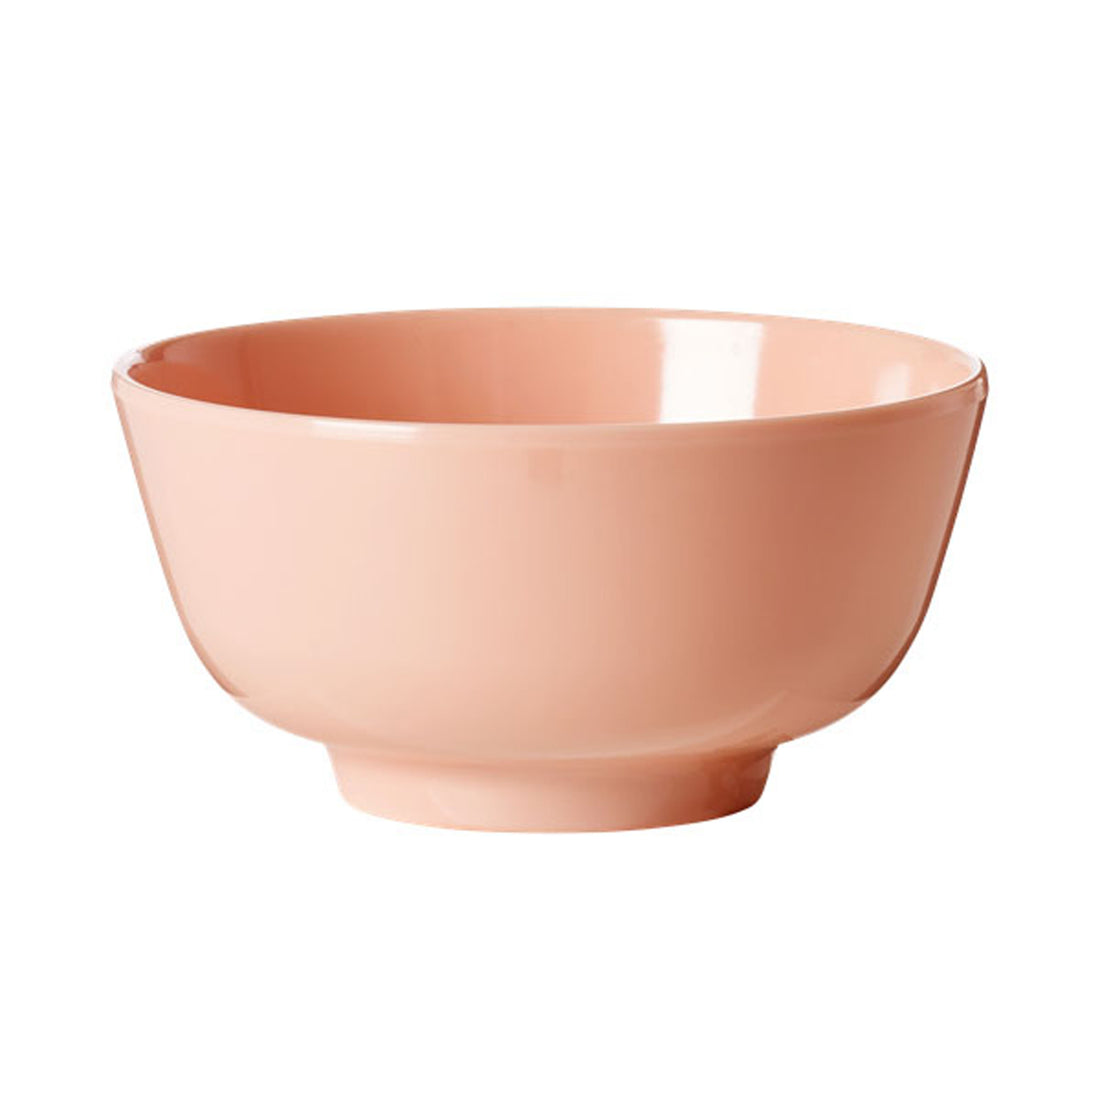 rice-dk-6-melamine-dipping-bowls-shine-colors- (7)